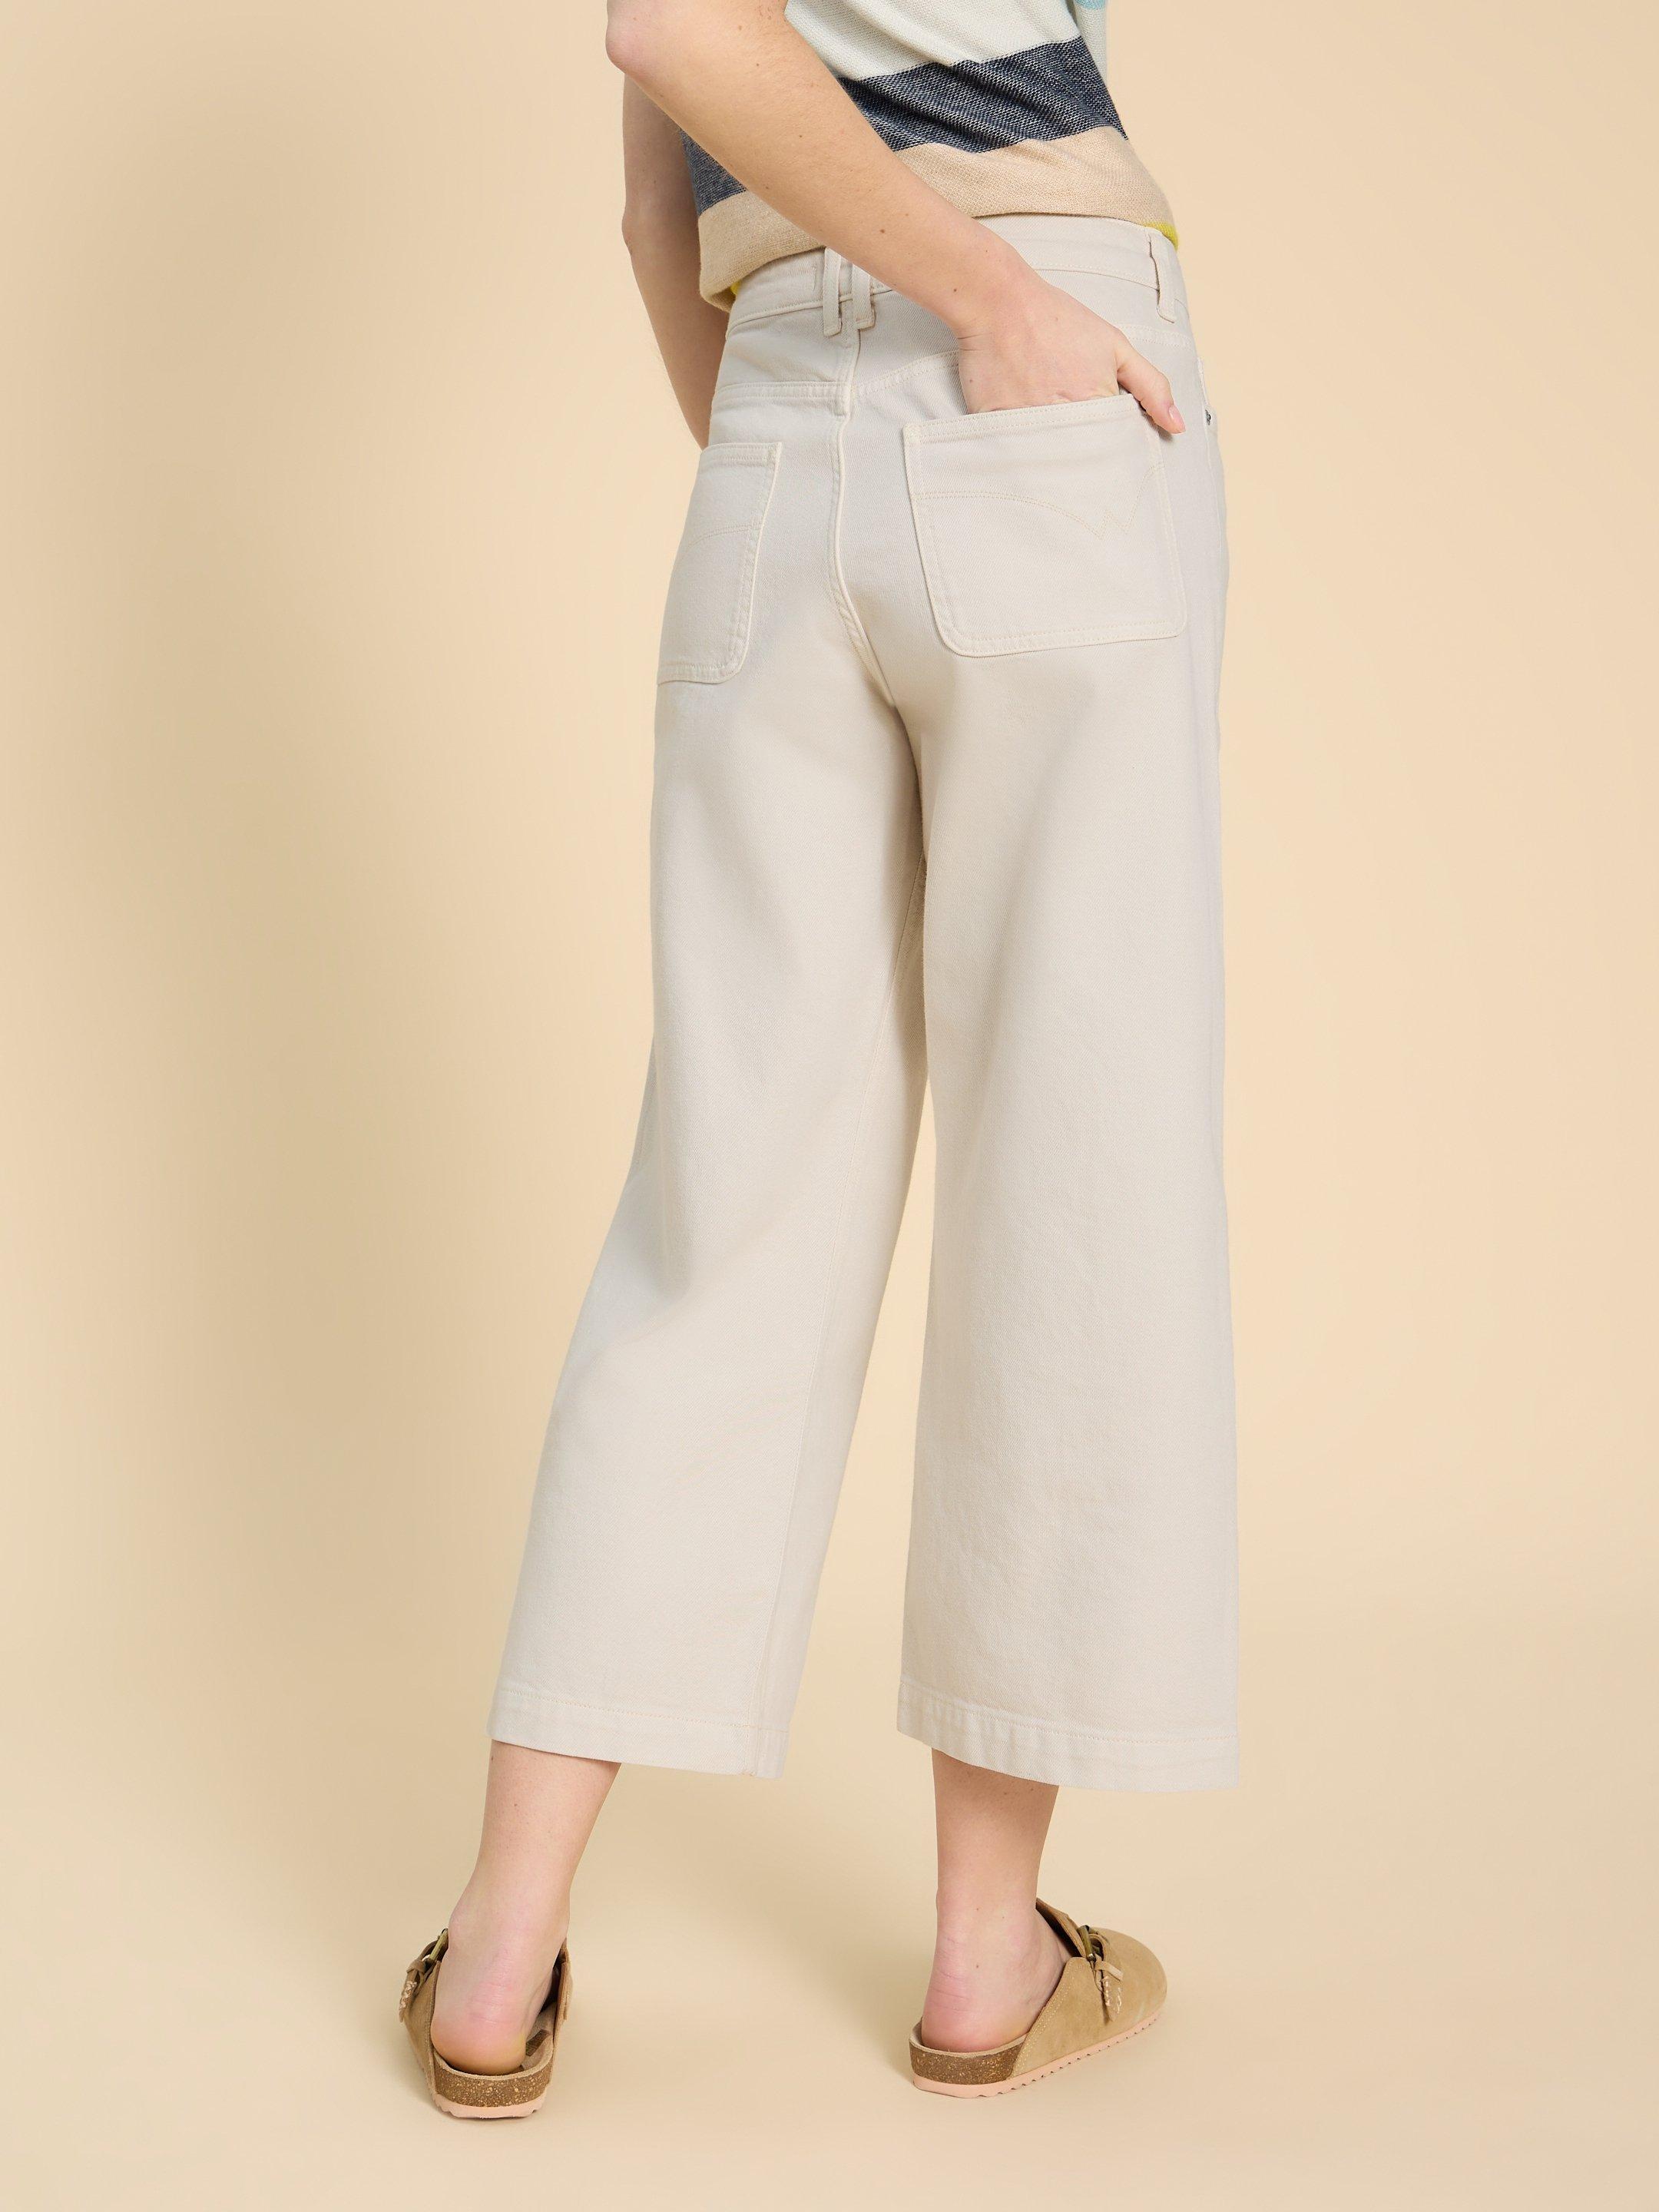 Tia Wide Leg Crop Jean in NAT WHITE - MODEL BACK